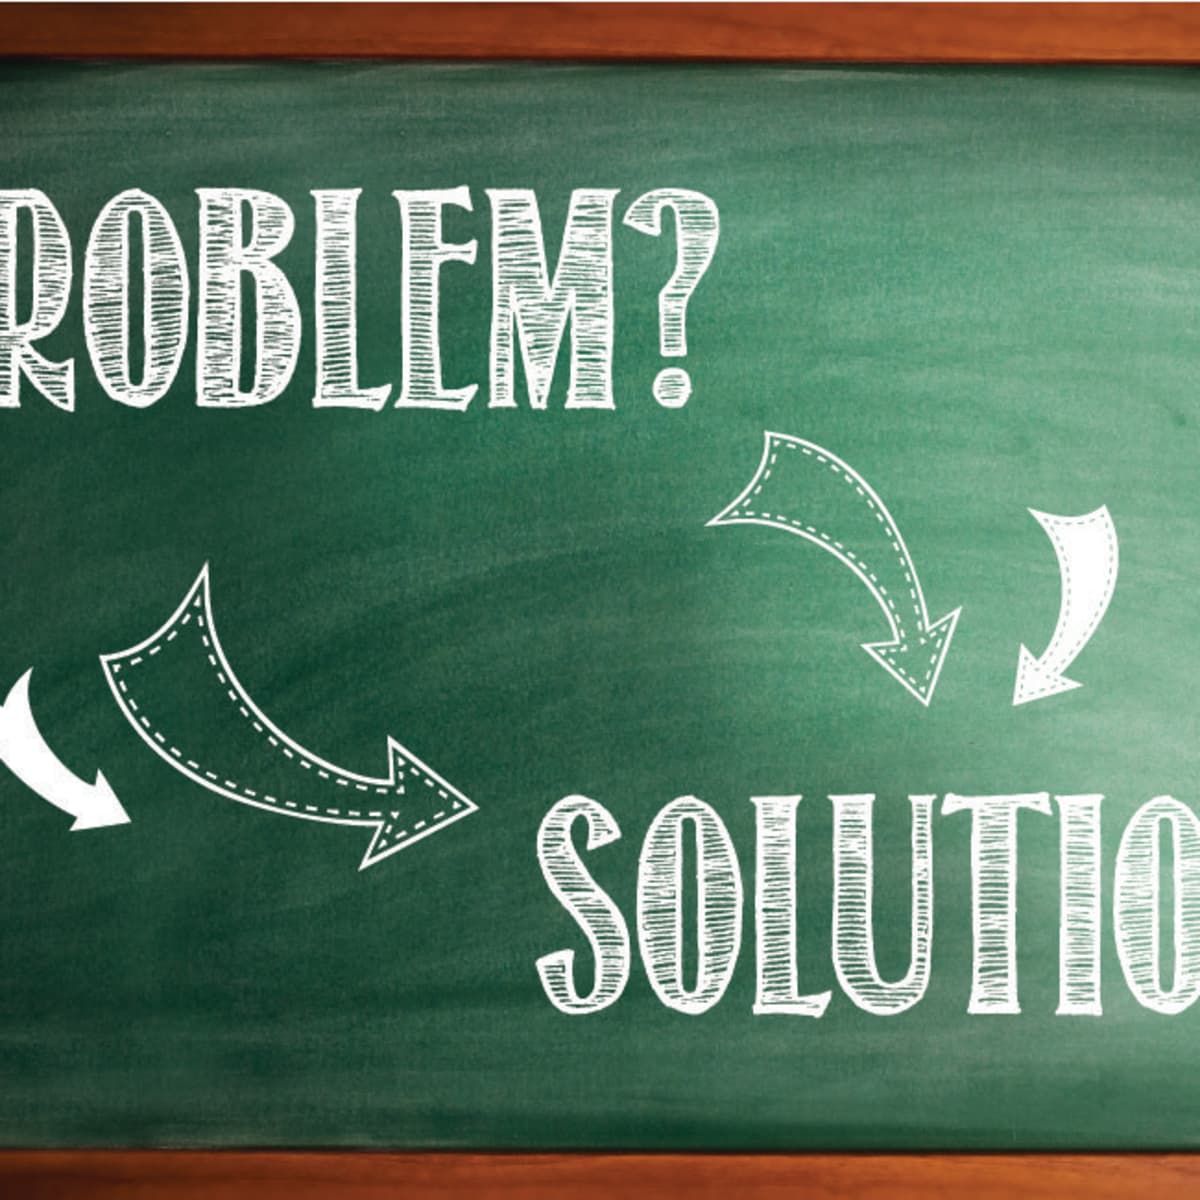 problem and solution essay topics examples